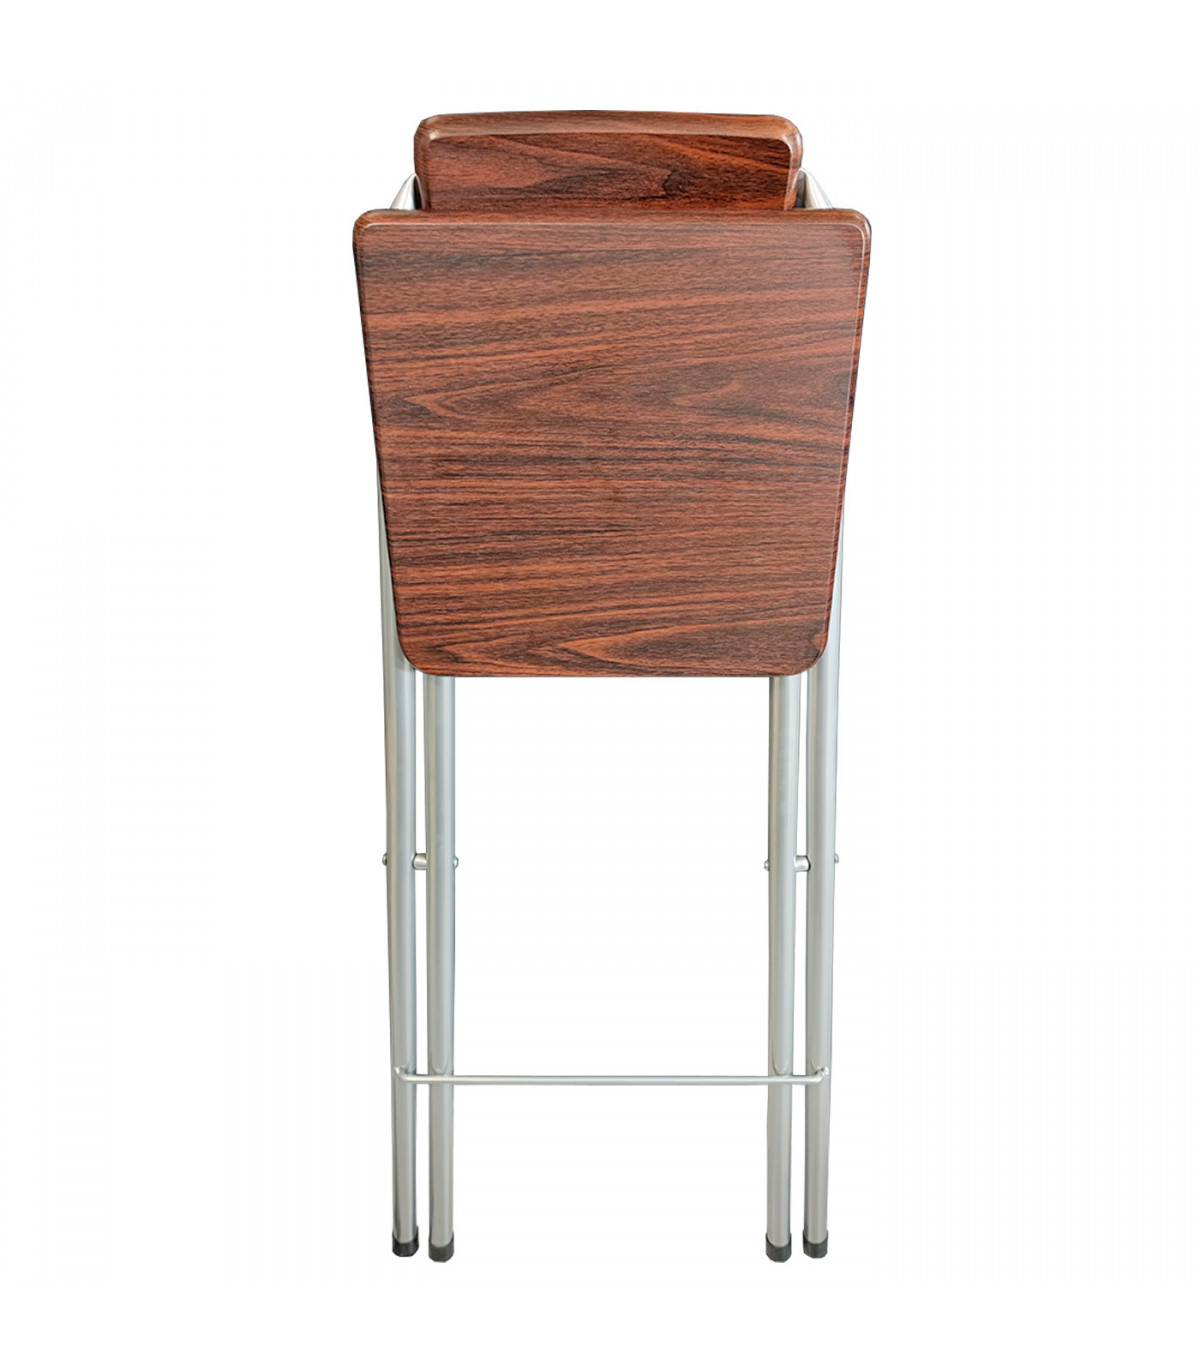  Taburete de bar alto plegable con respaldo, sillas plegables de  altura de barra, taburete plegable de mostrador de 14 pulgadas, asiento de  silla de cocina, taburete plegable de madera, no requiere 